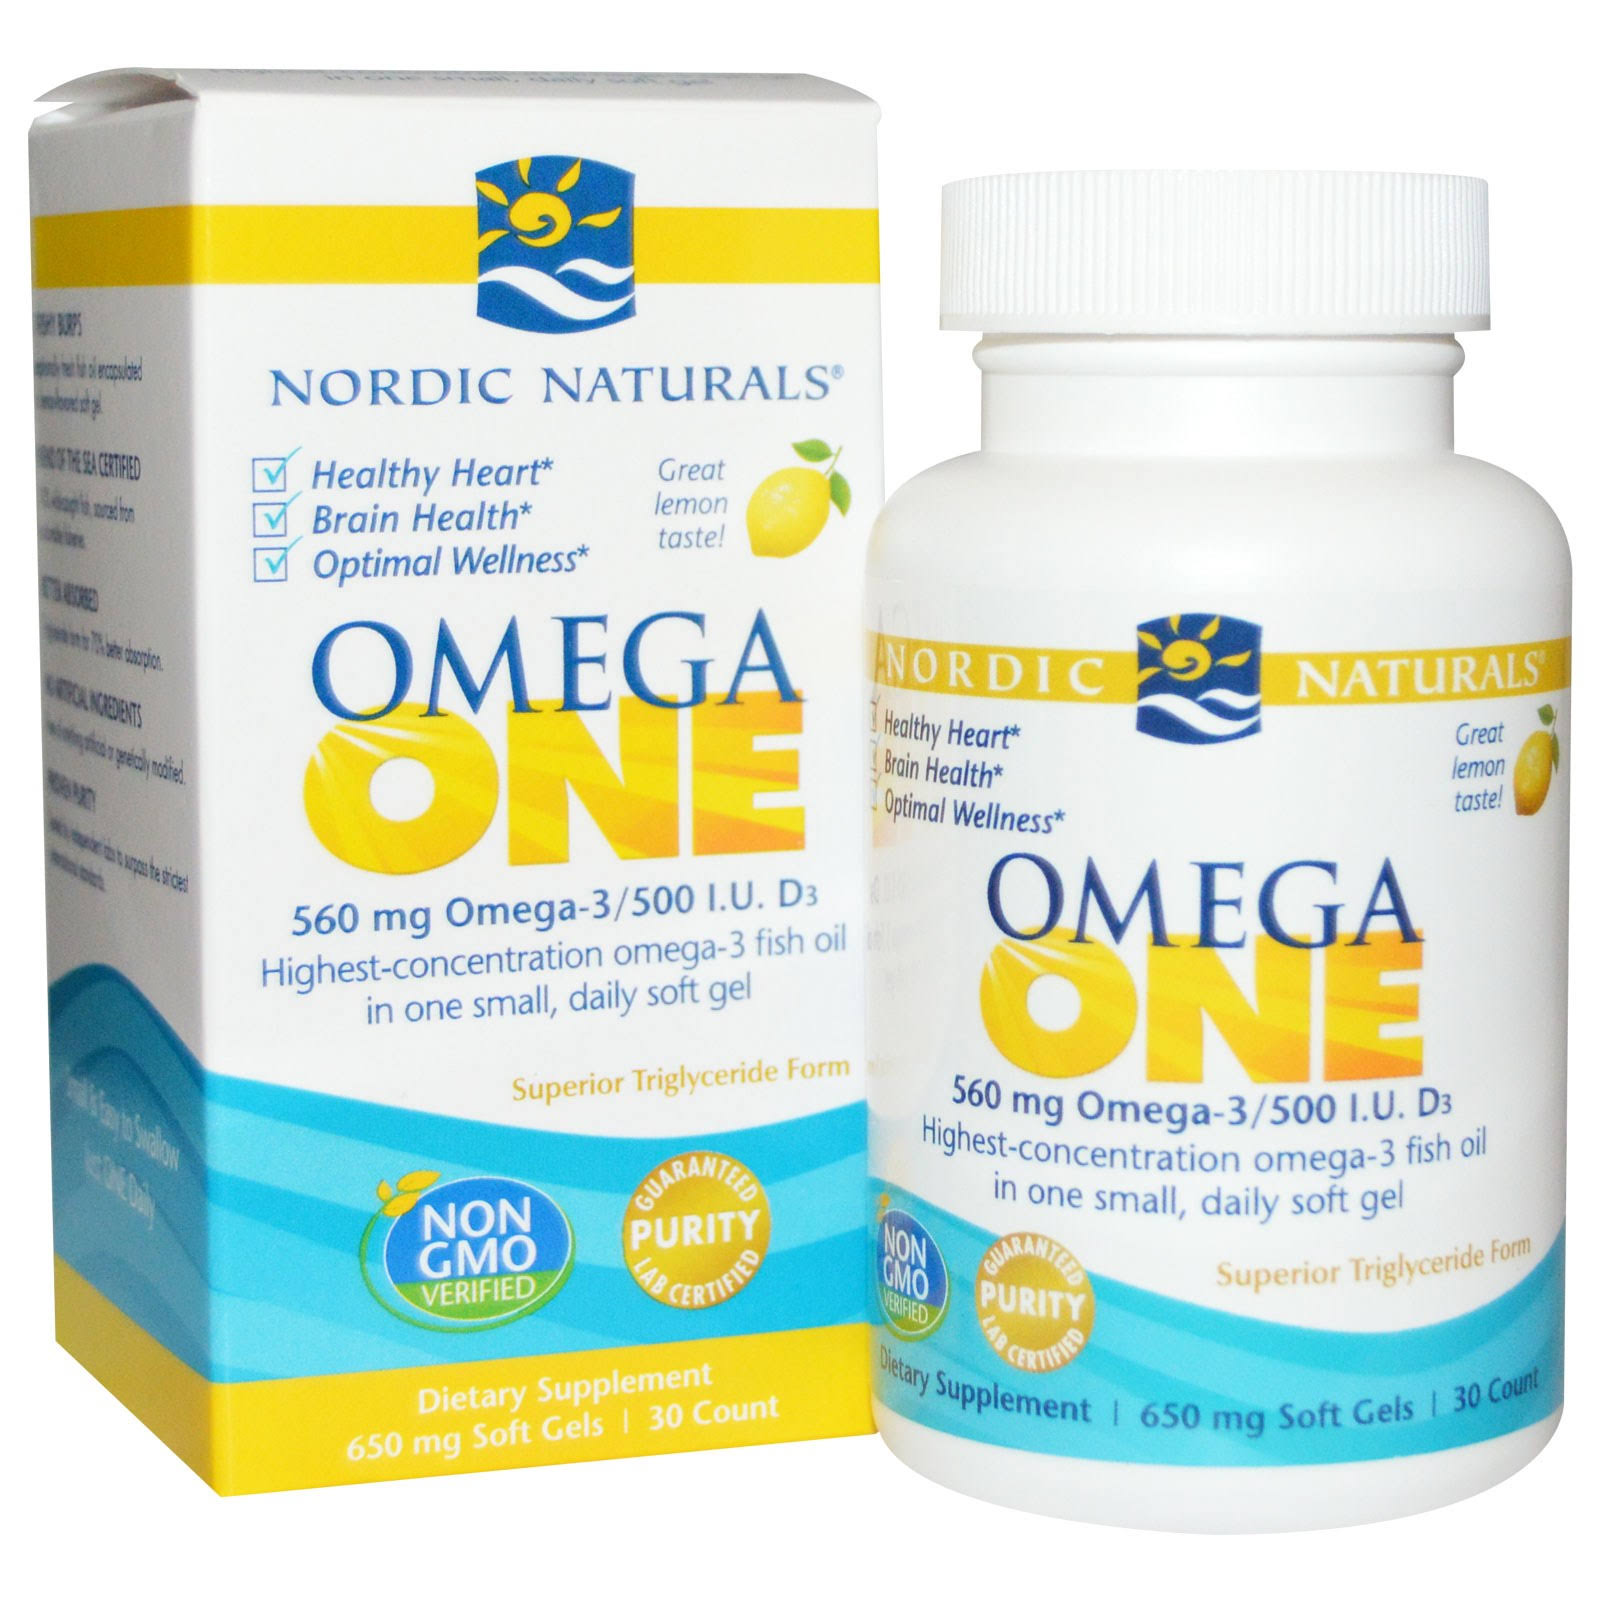 Nordic Naturals Omega One Supplement - Lemon, 560mg, 30ct